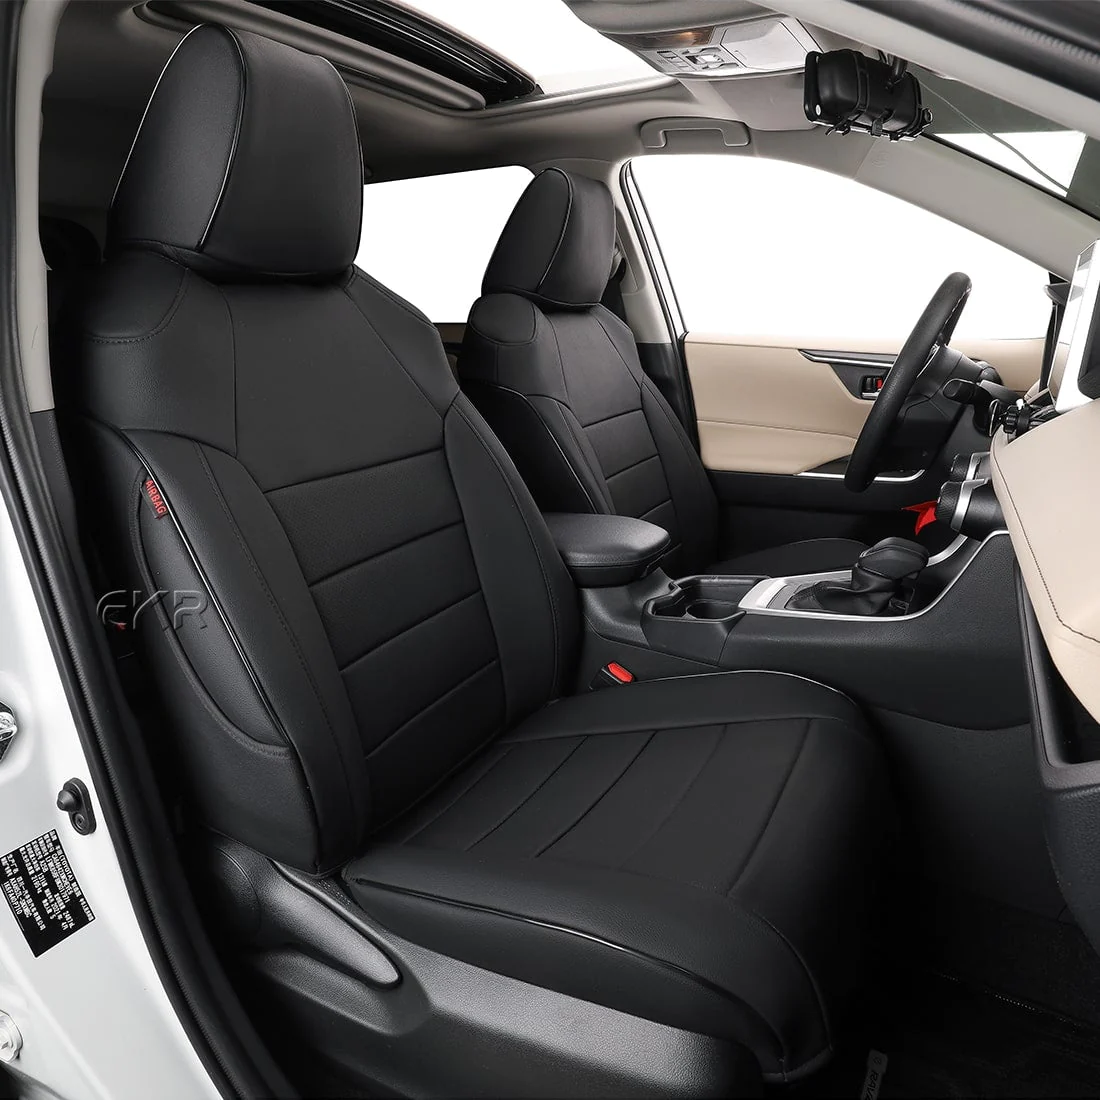 إنفينيتي M37 interior - Seats